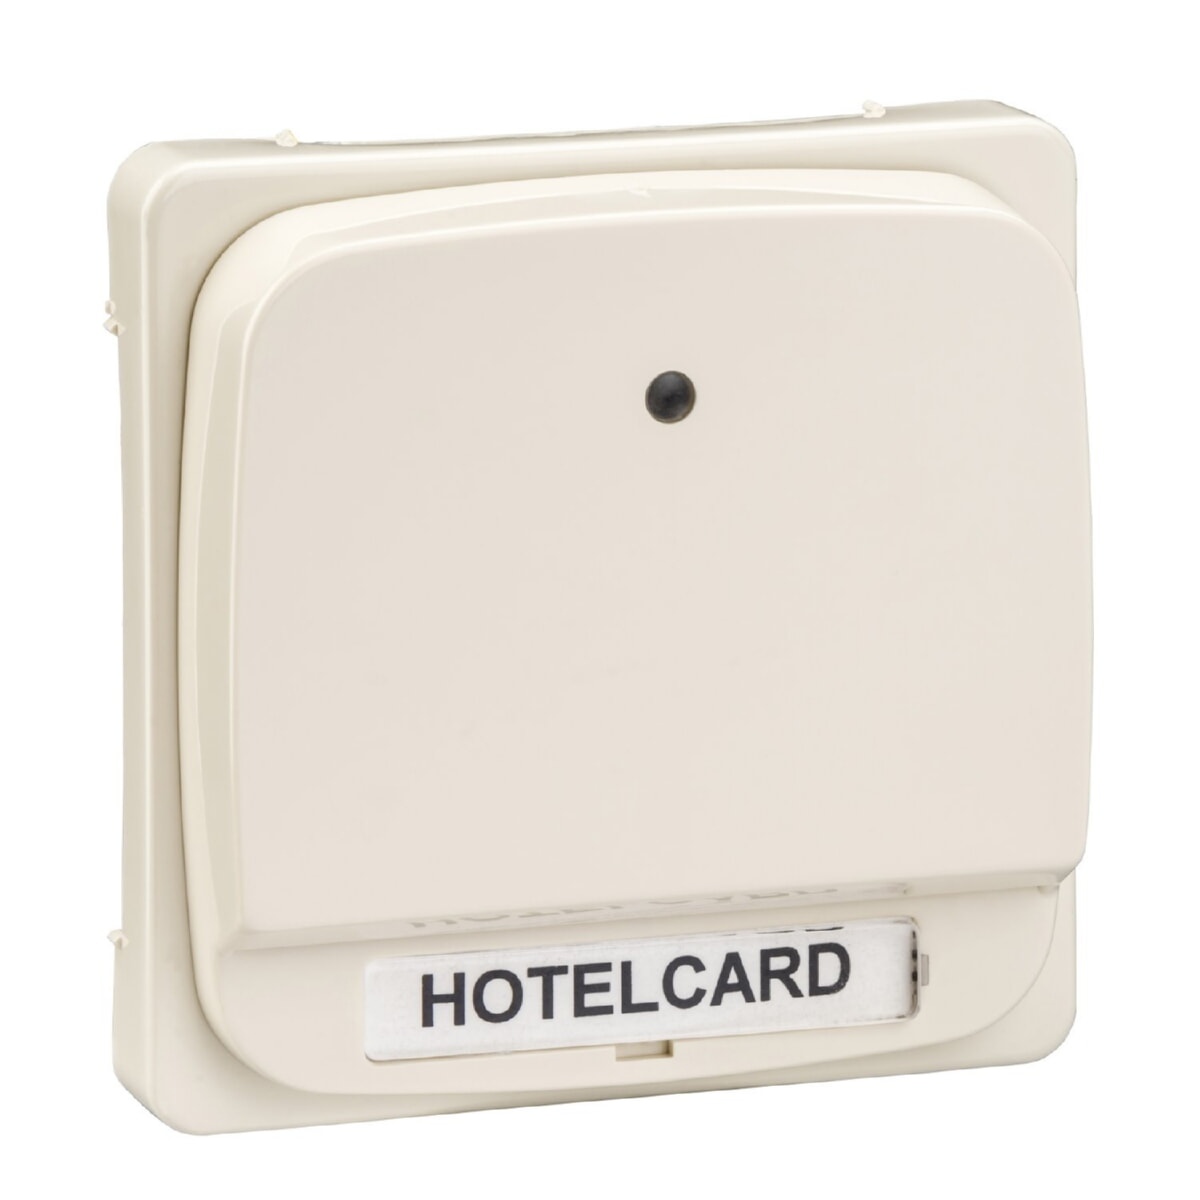 ELSO Hotelcard-Schalter 203050 perlweiß